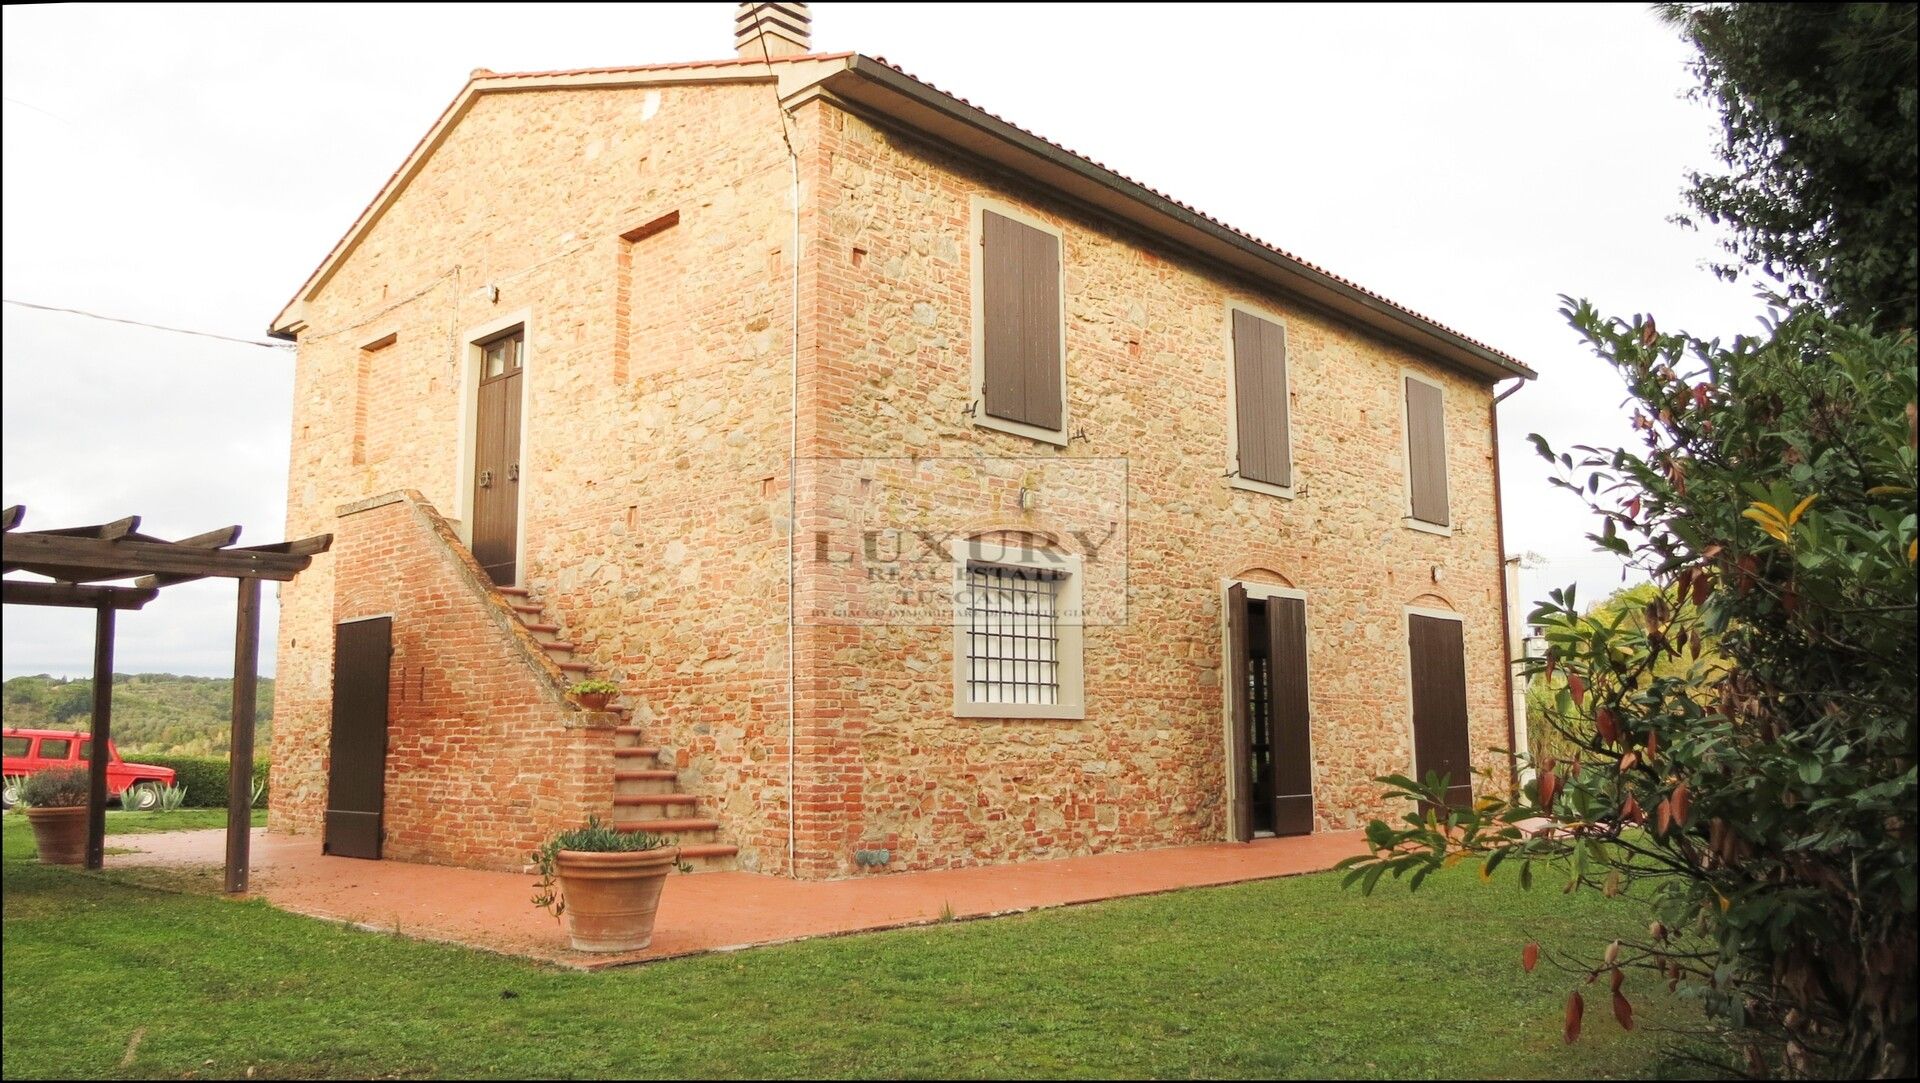 For sale cottage in quiet zone Pisa Toscana